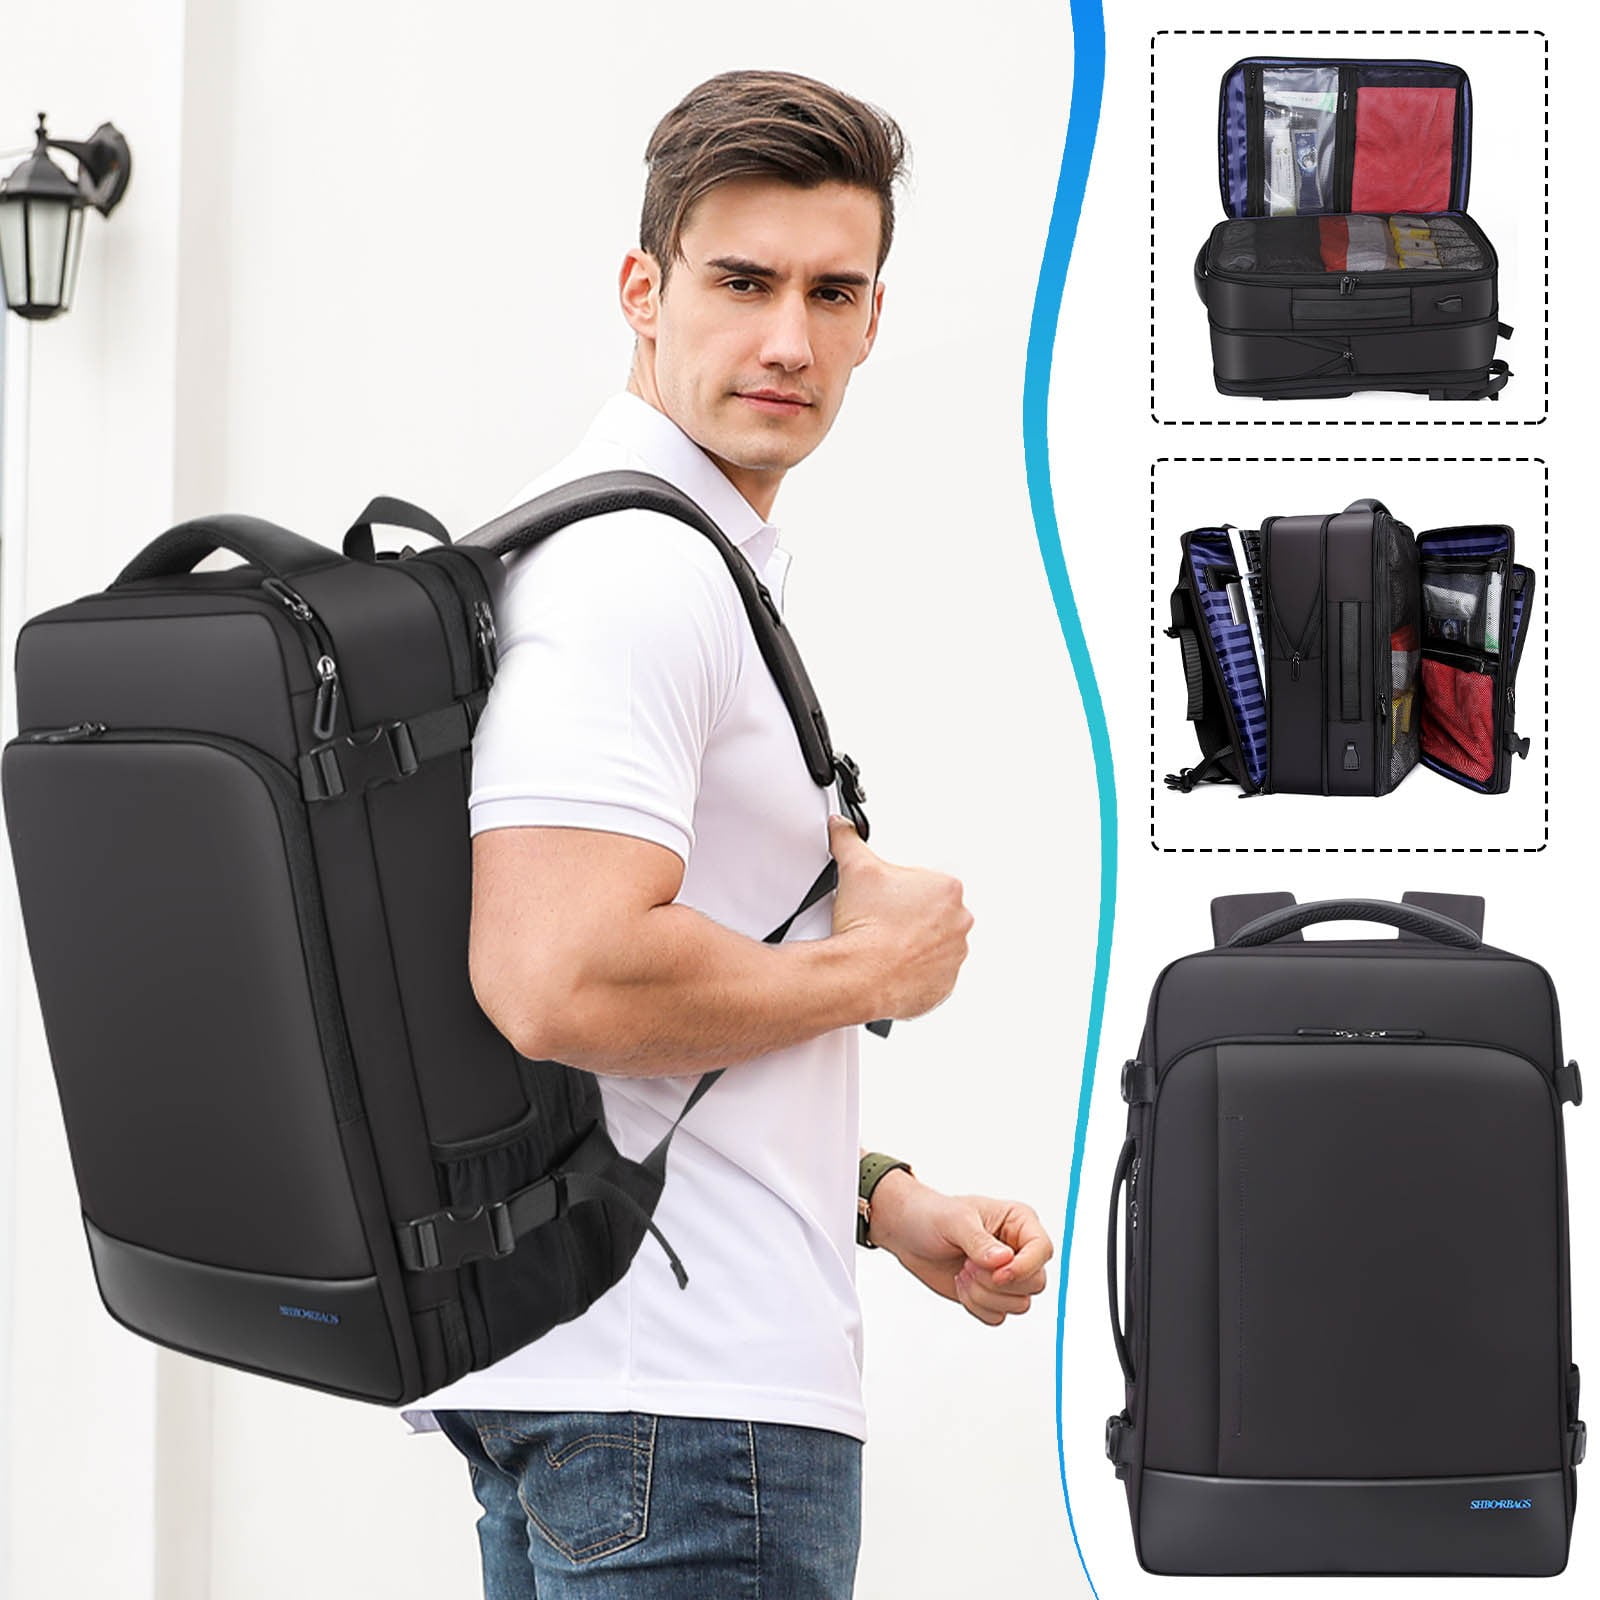 BeforeyaynExtra Large Travel Backpack For Men Women, 40L Expandable ...